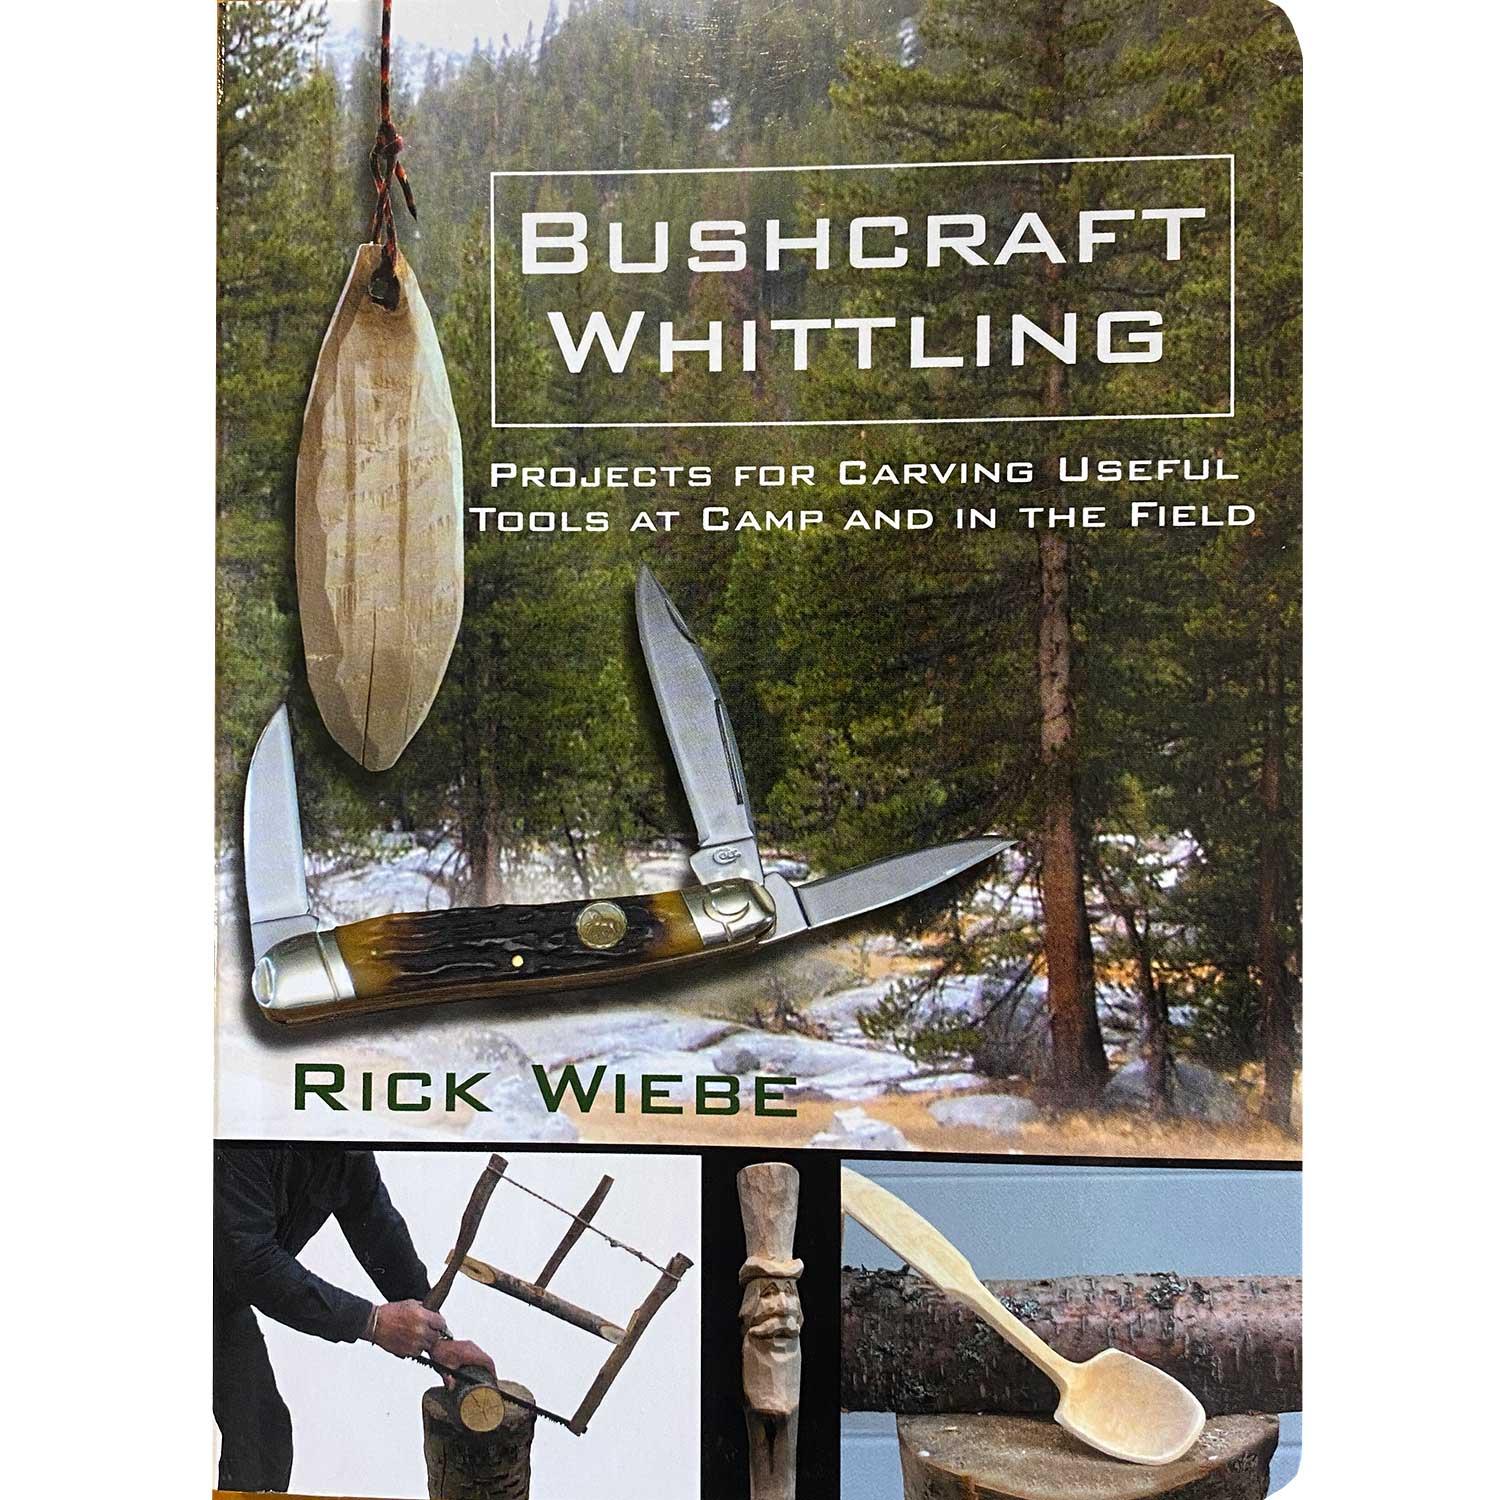 Bushcraft Whittling By Rick Weibe